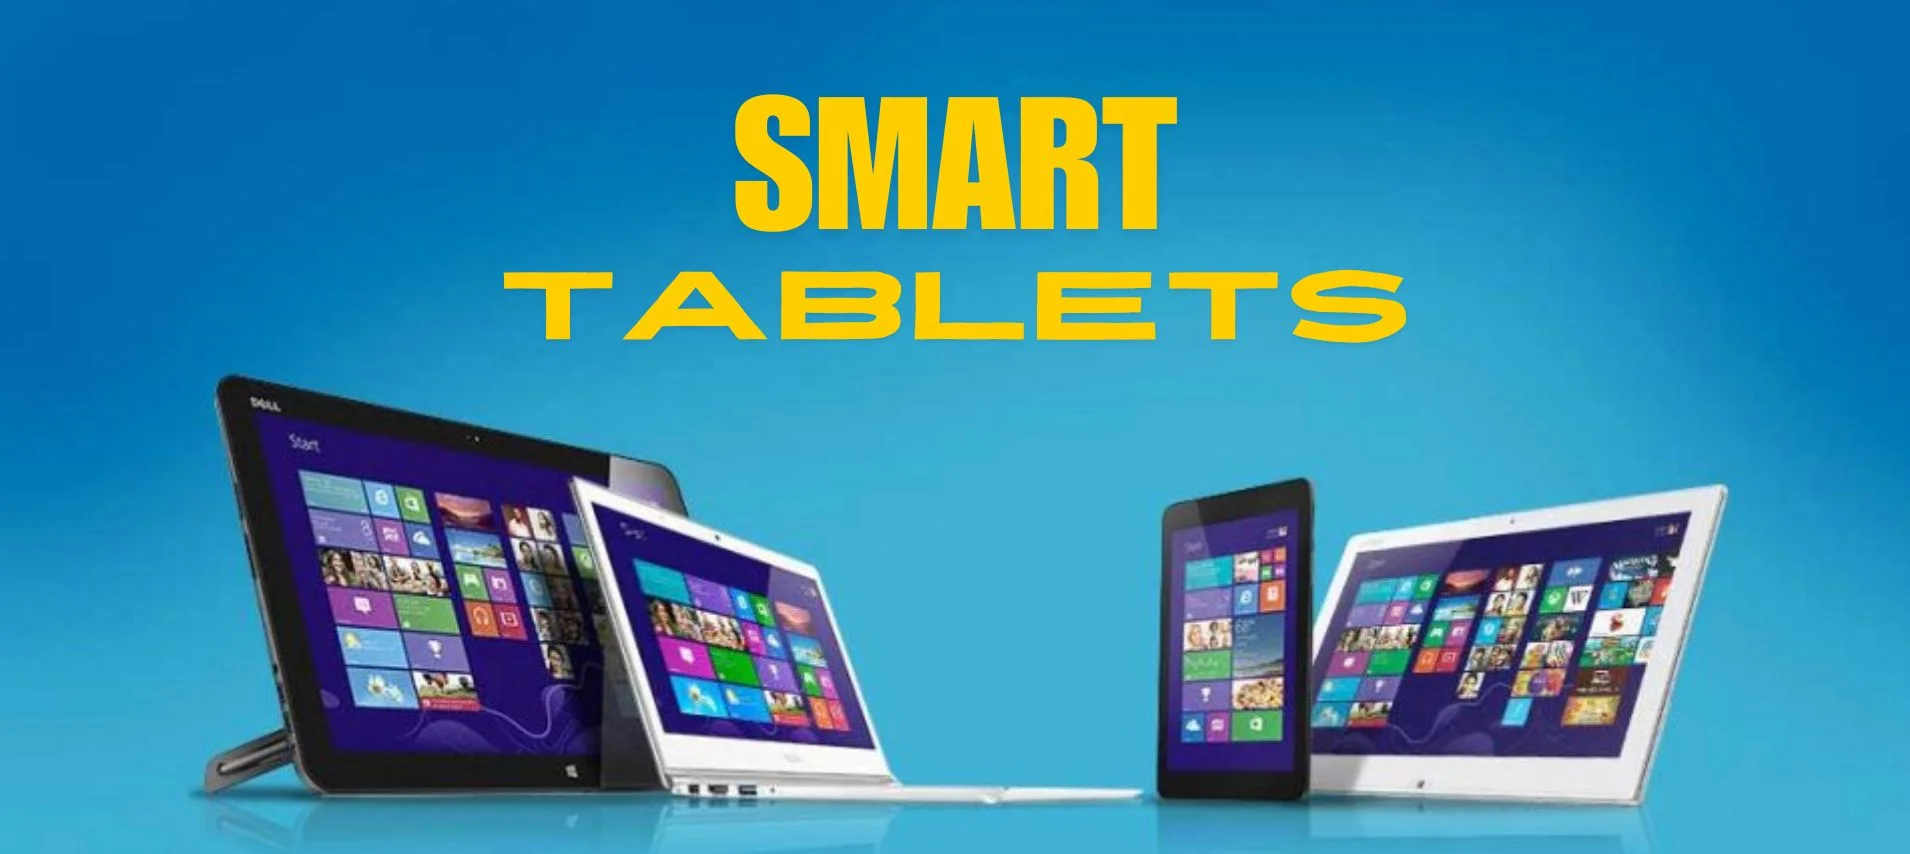 tablets for sale